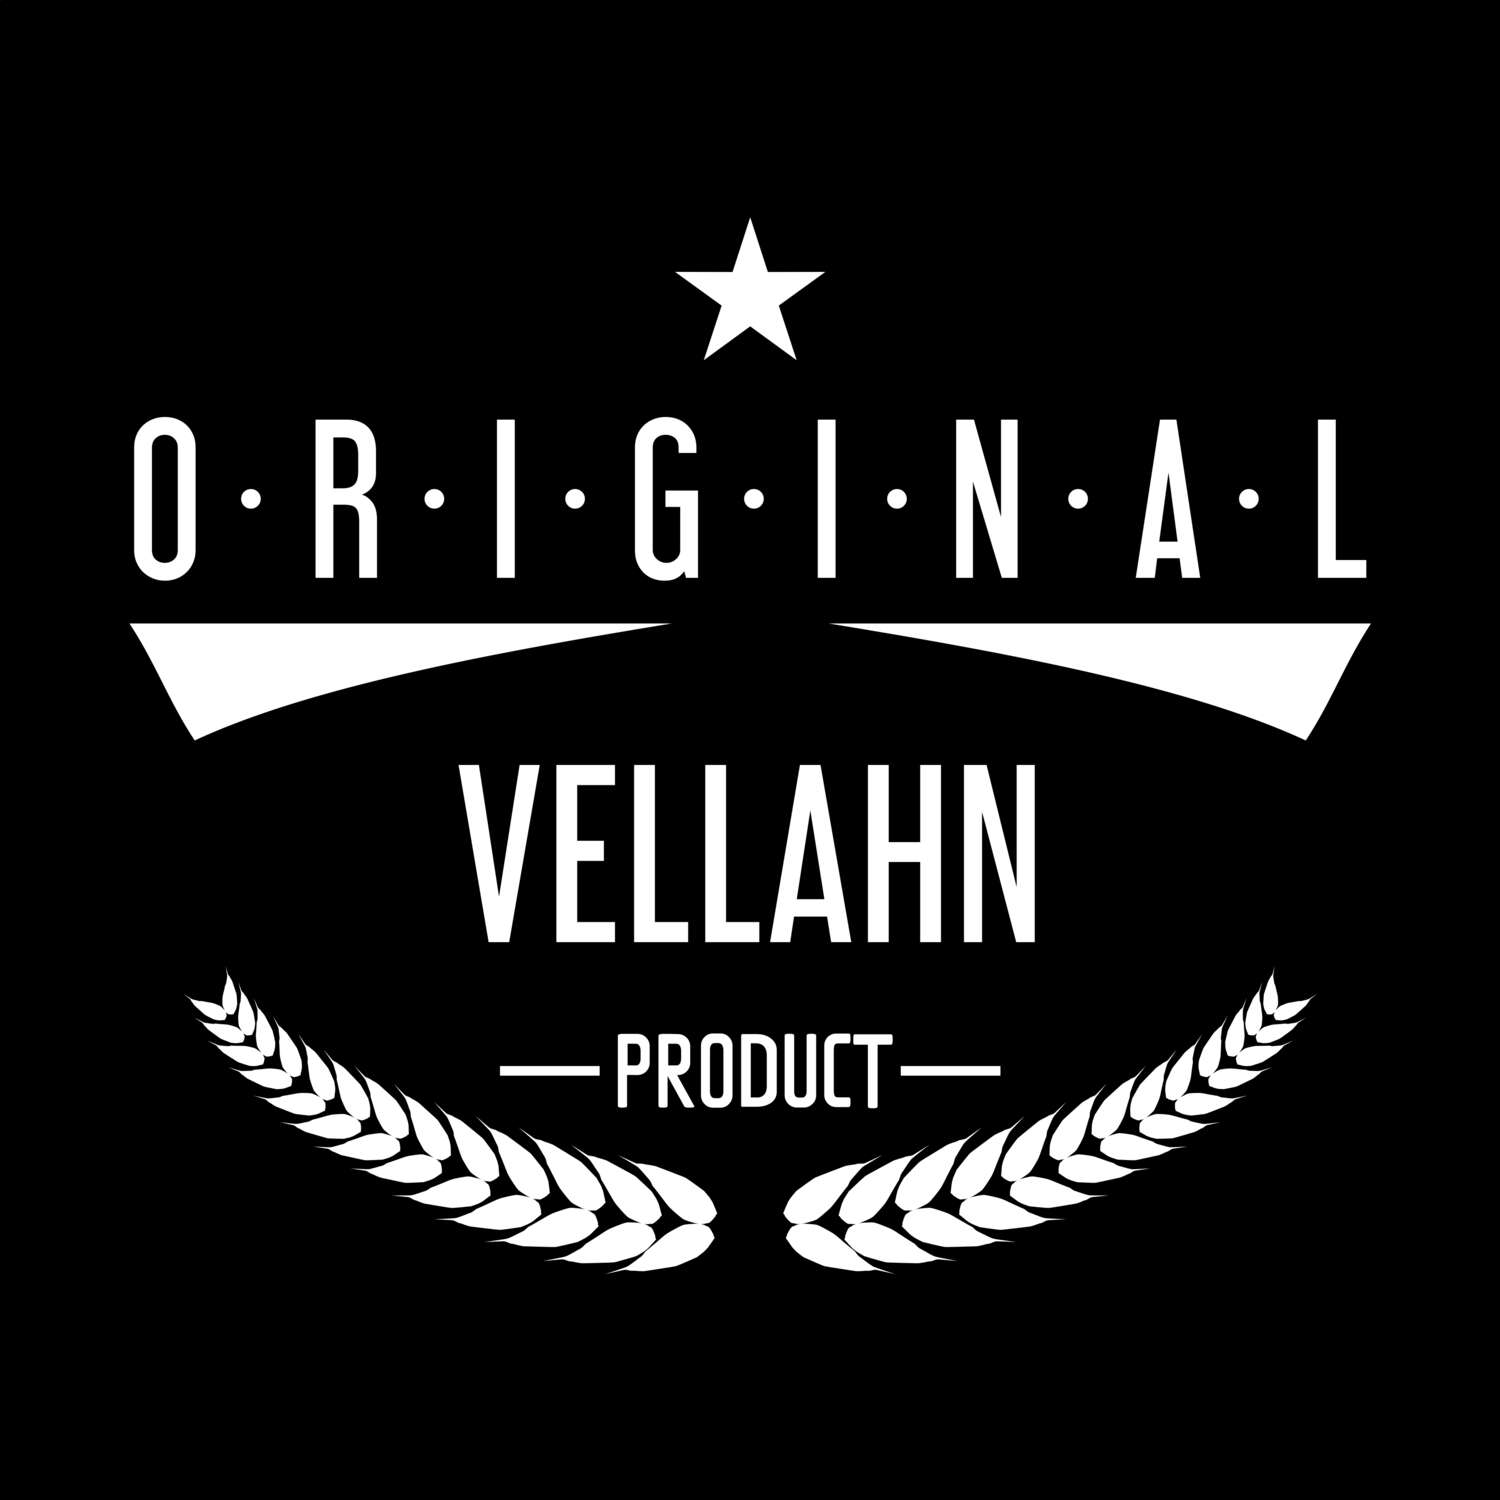 Vellahn T-Shirt »Original Product«